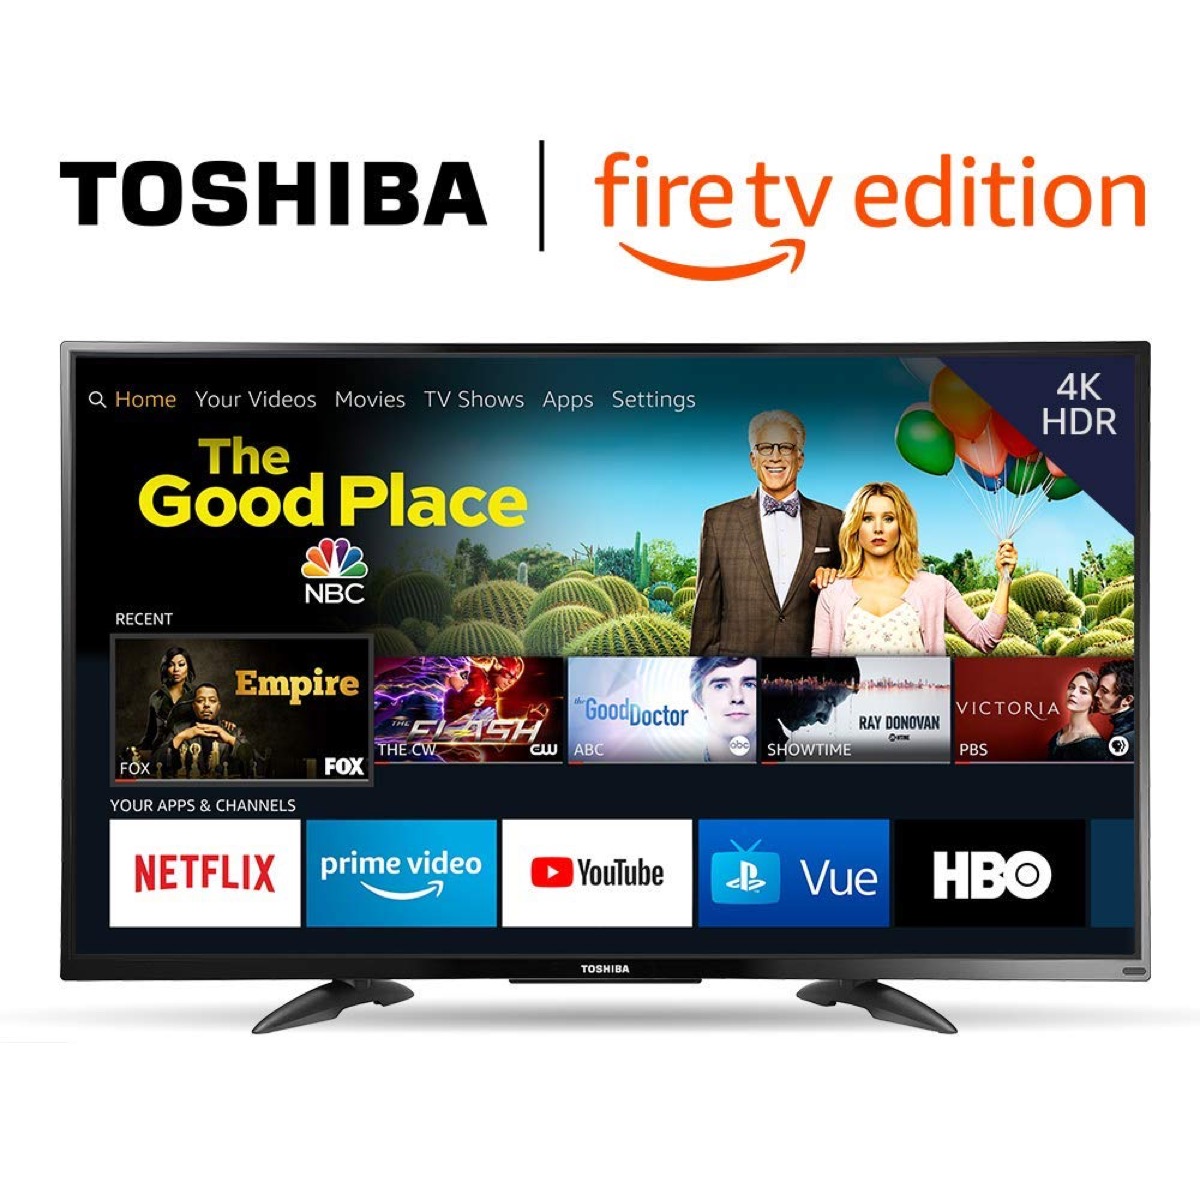 toshiba 50 inch flatscreen tv, prime day deals